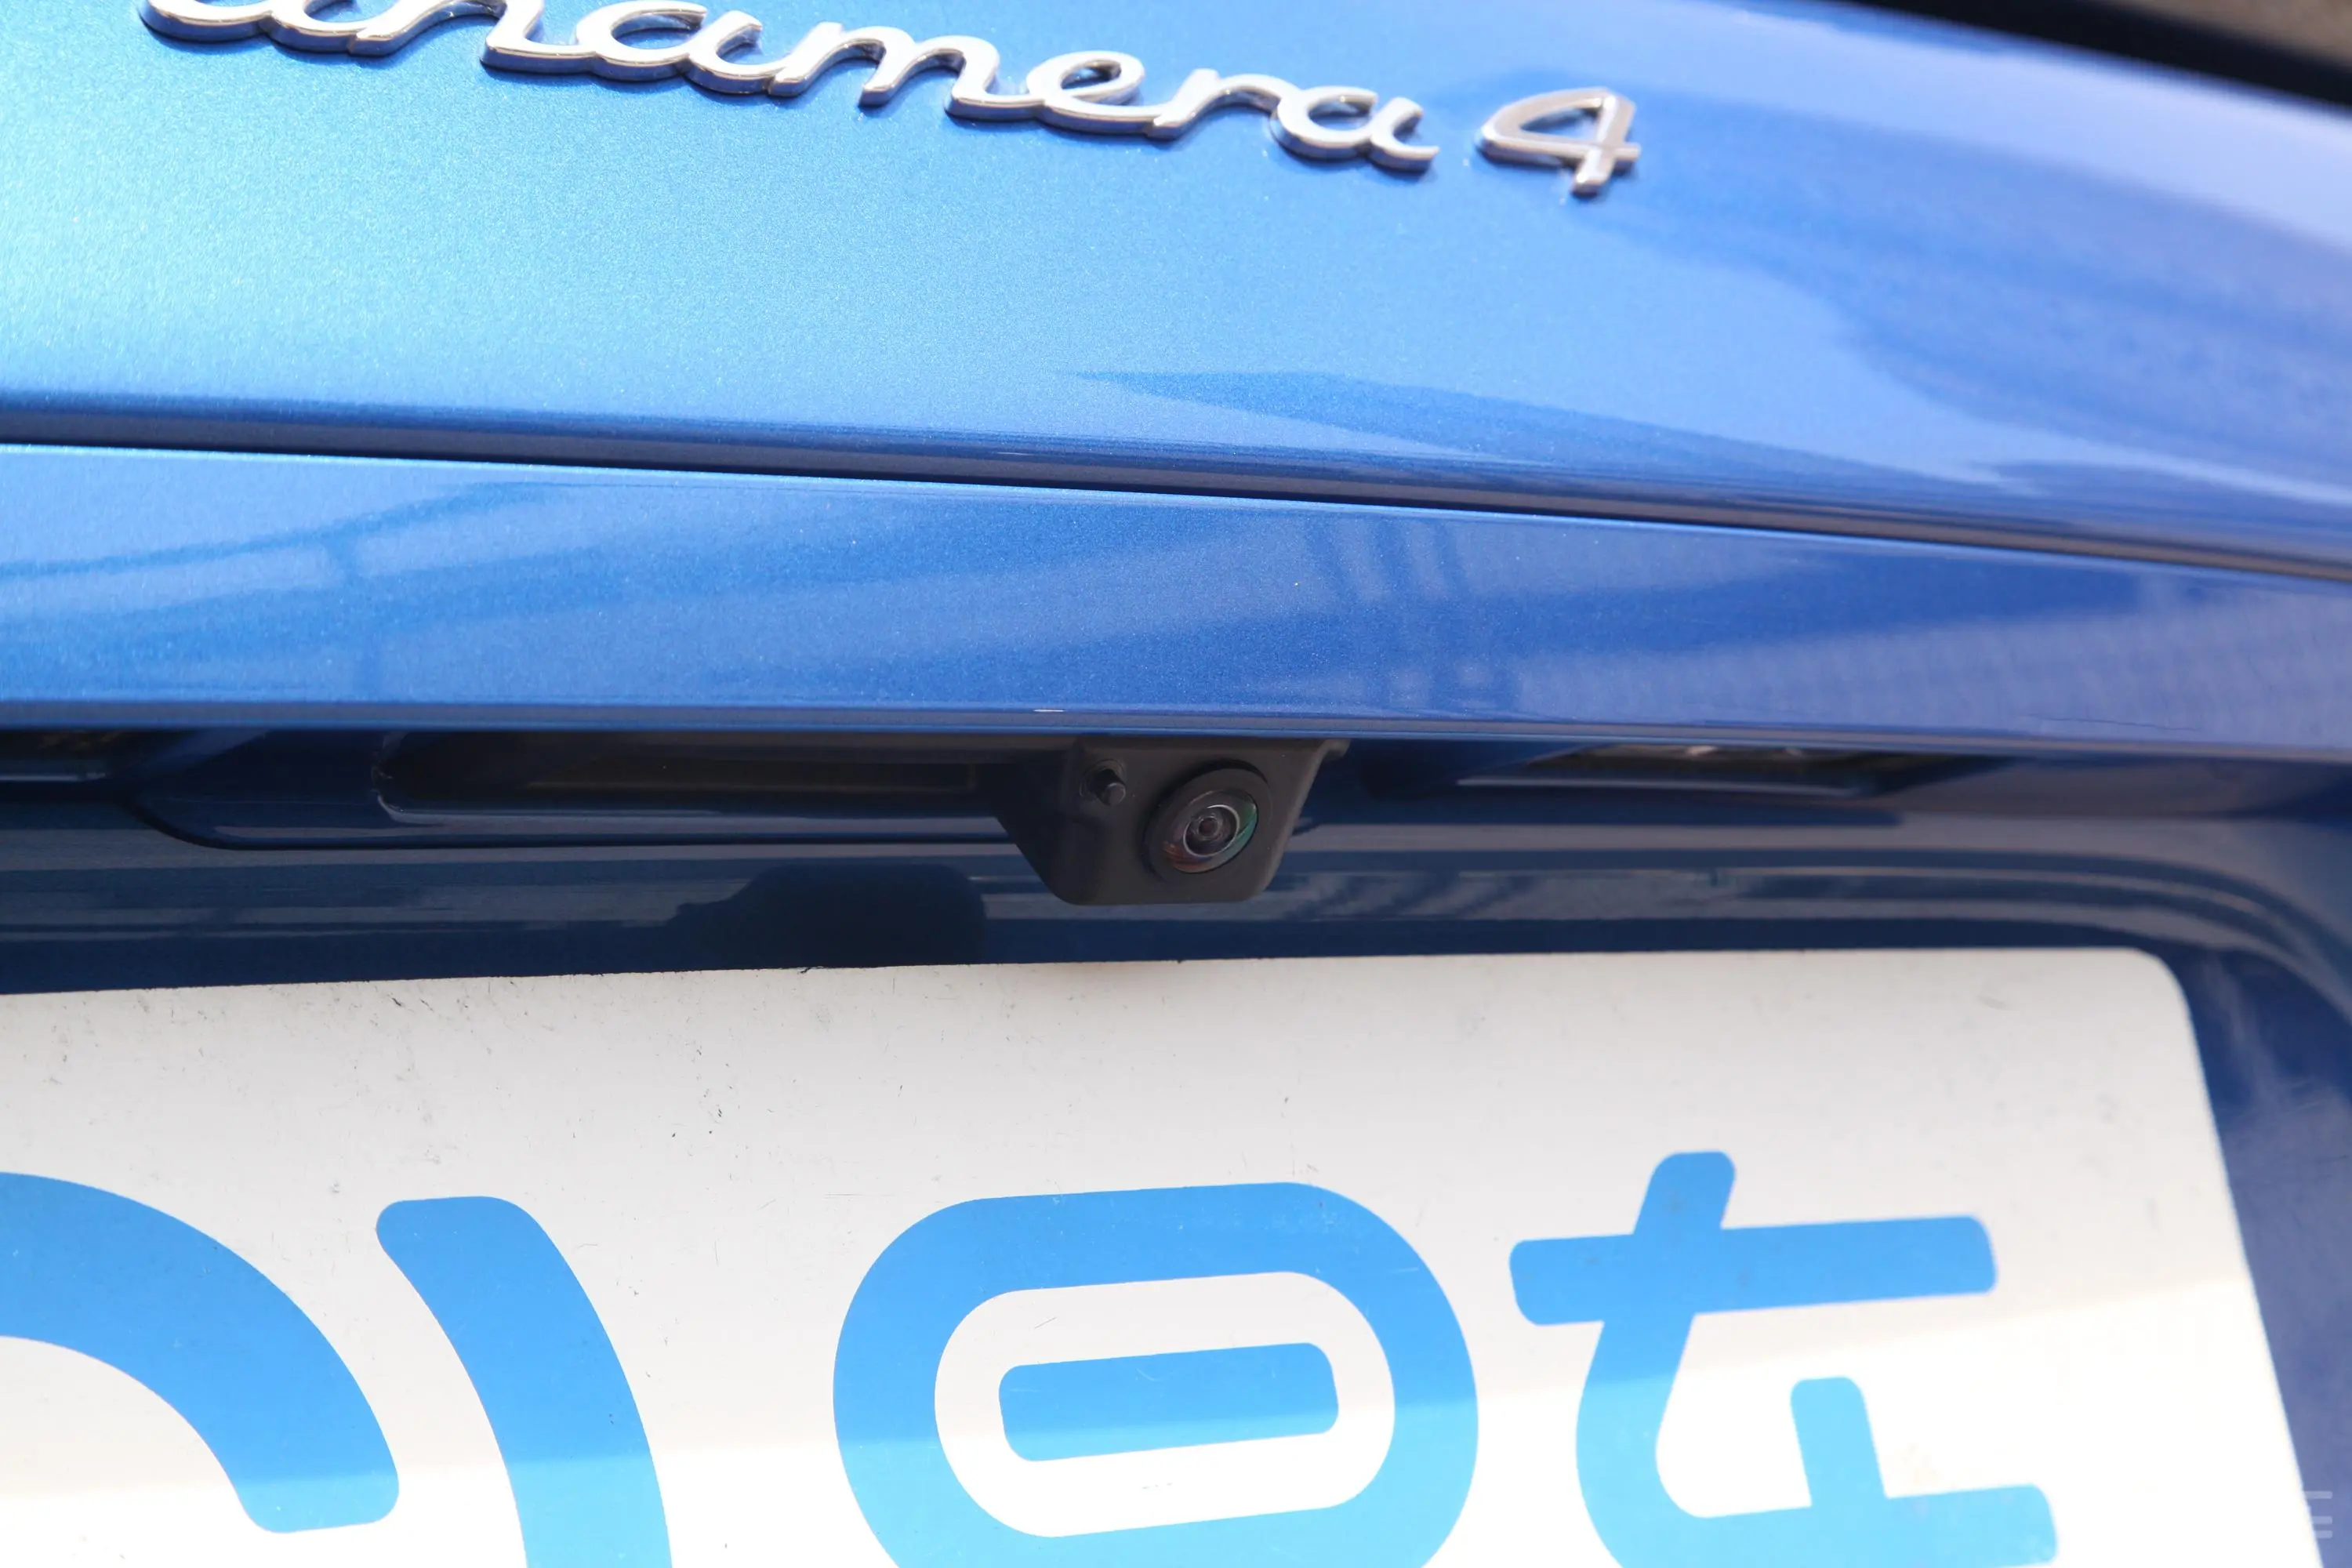 PanameraPanamera 4 Sport Turismo 2.9T外观